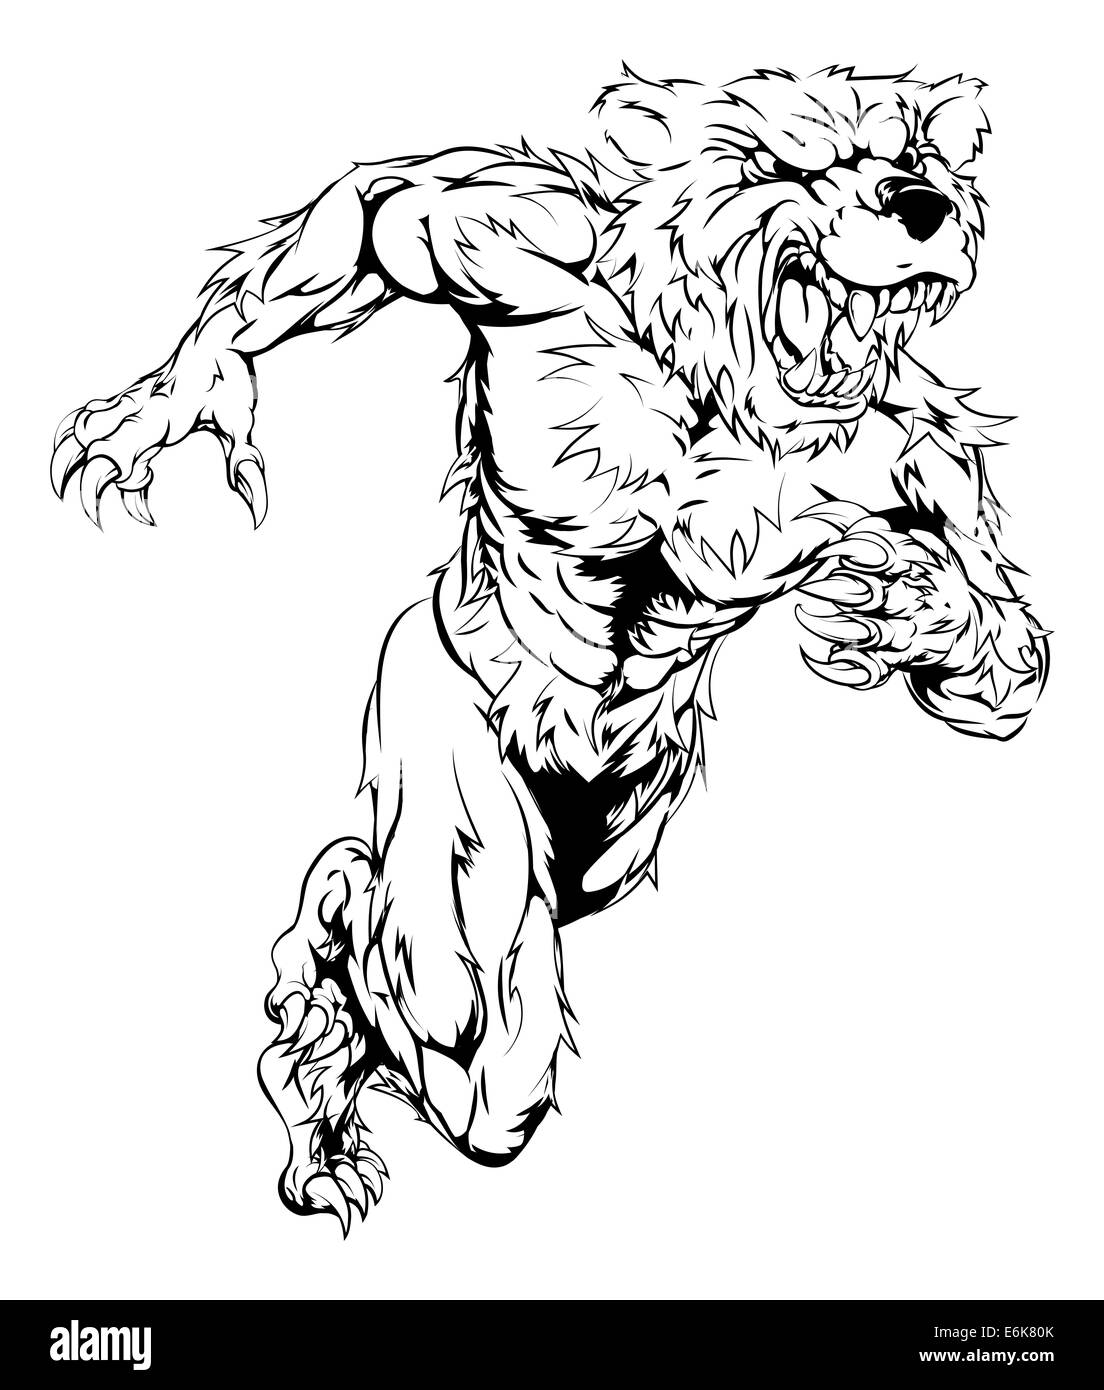 A bear man character or sports mascot charging, sprinting or running Stock Photo